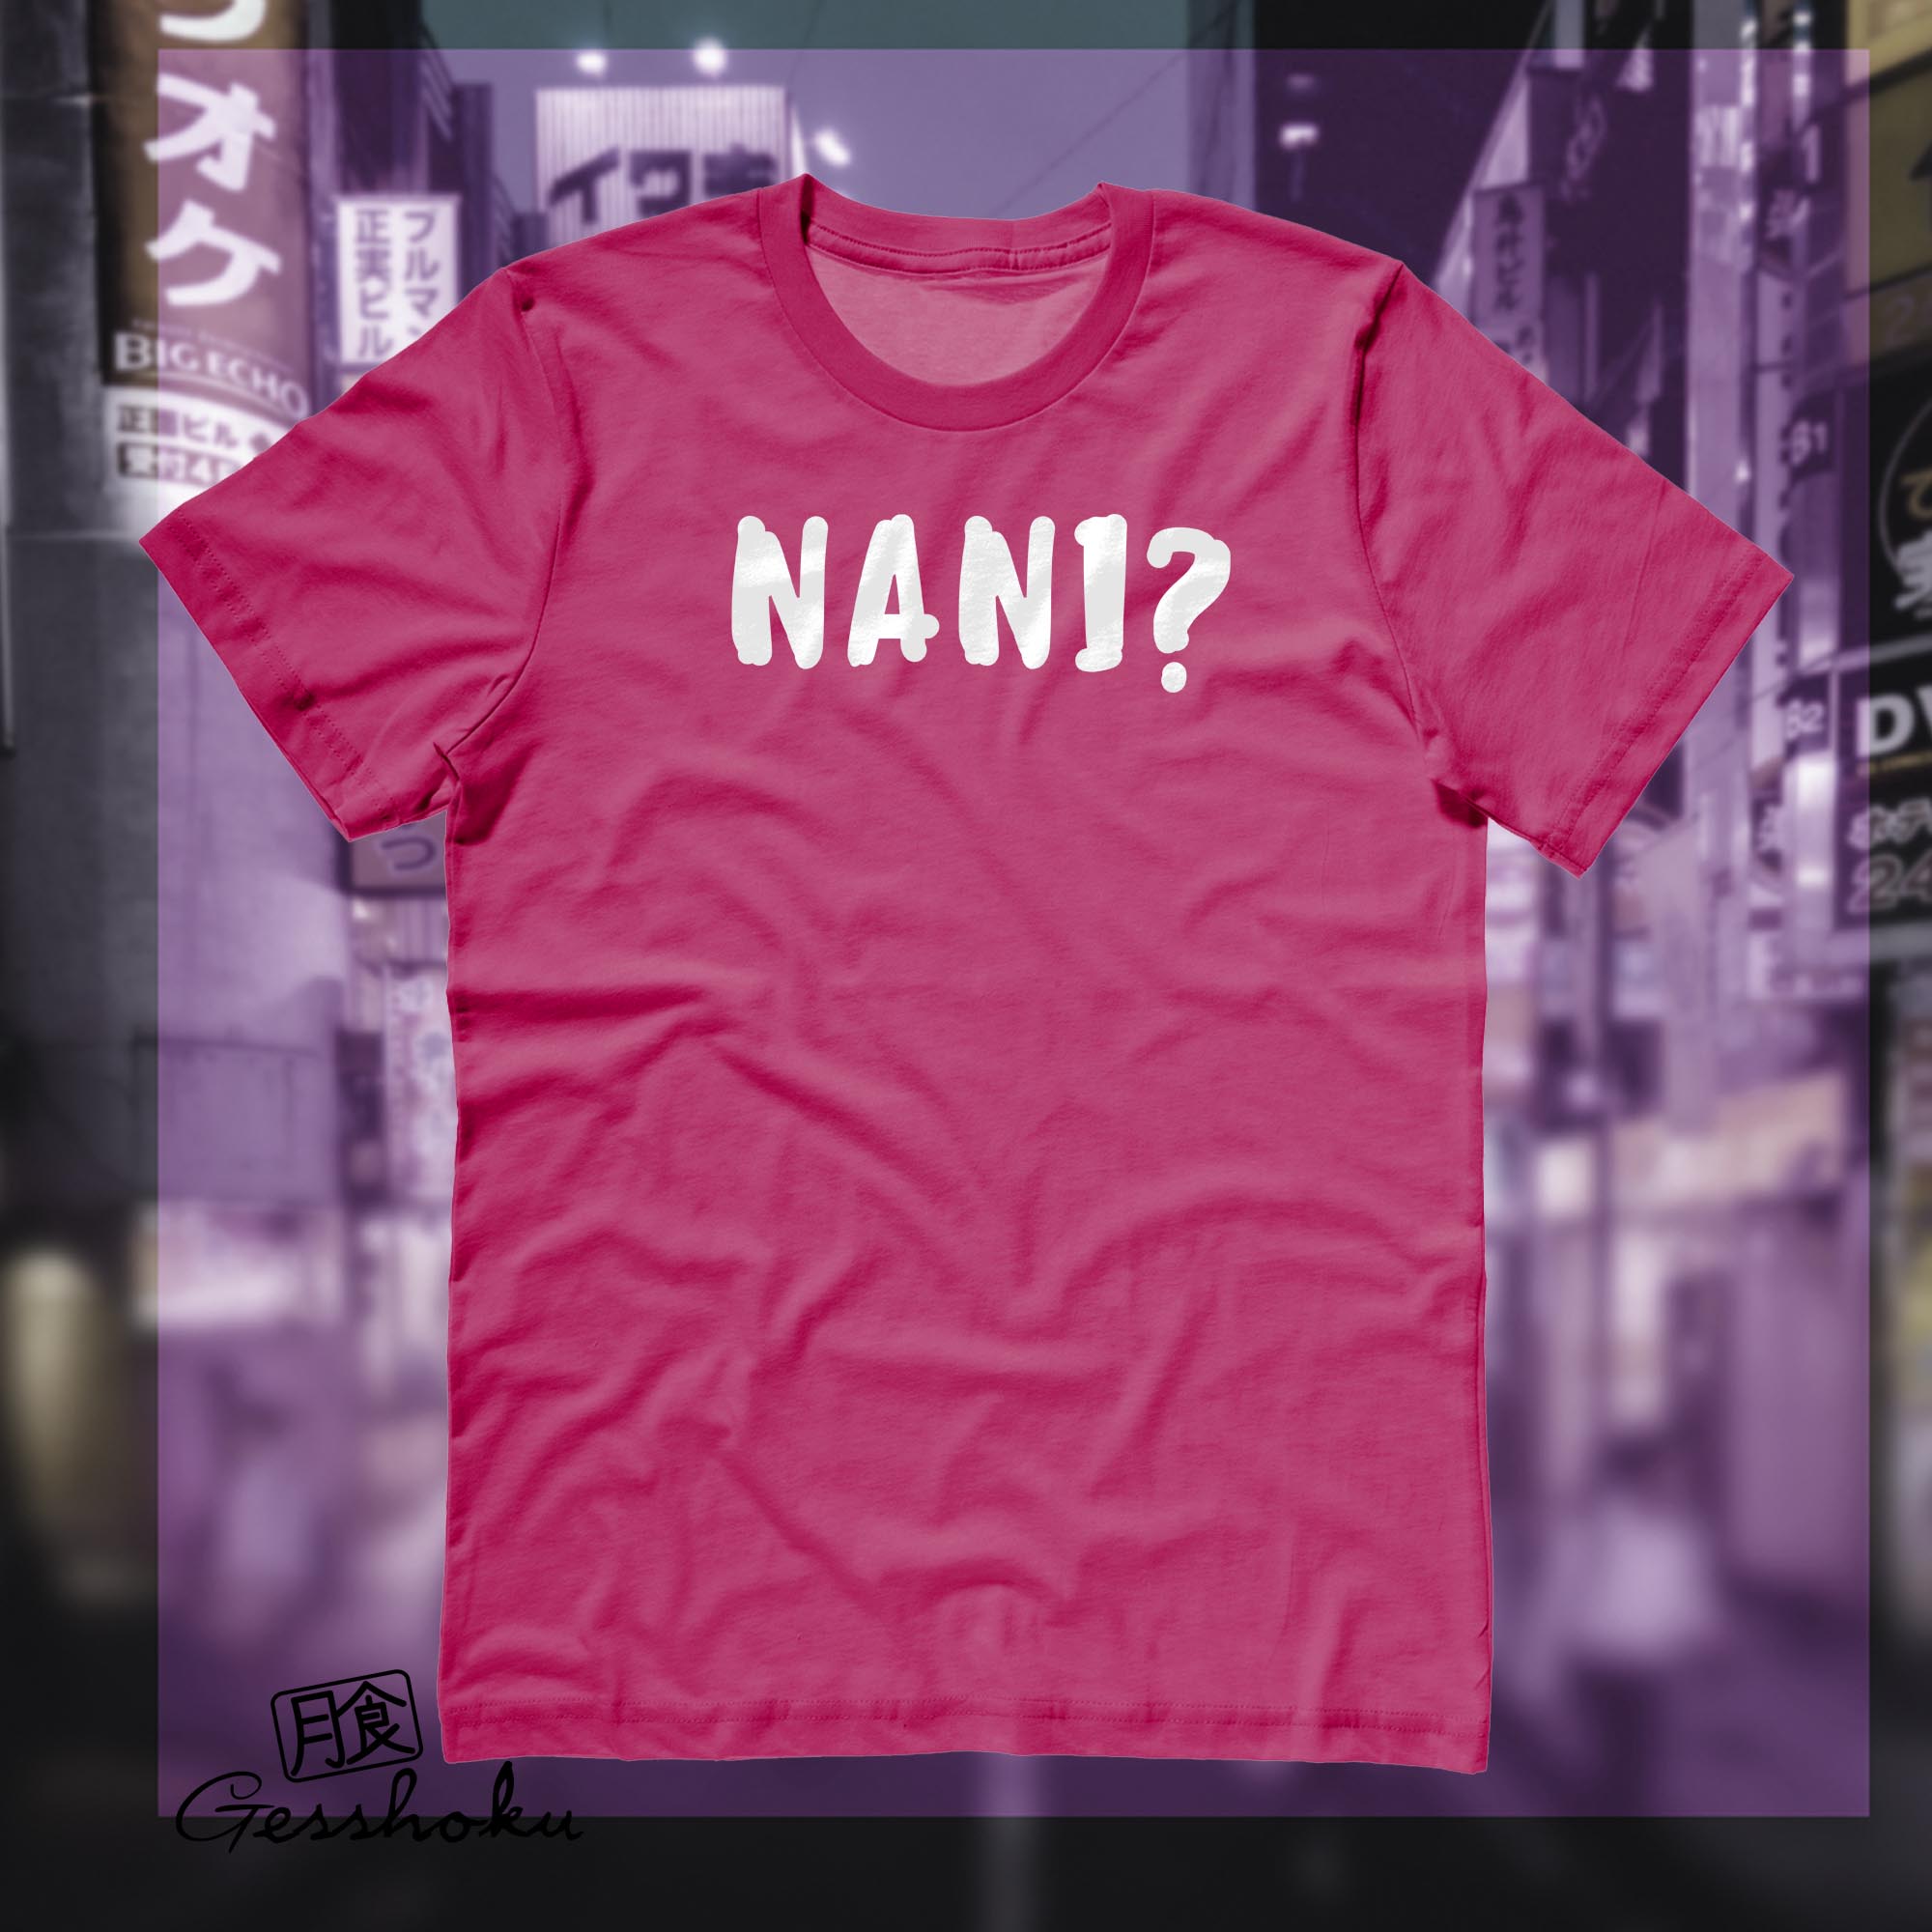 Nani? T-shirt (text version) - Hot Pink